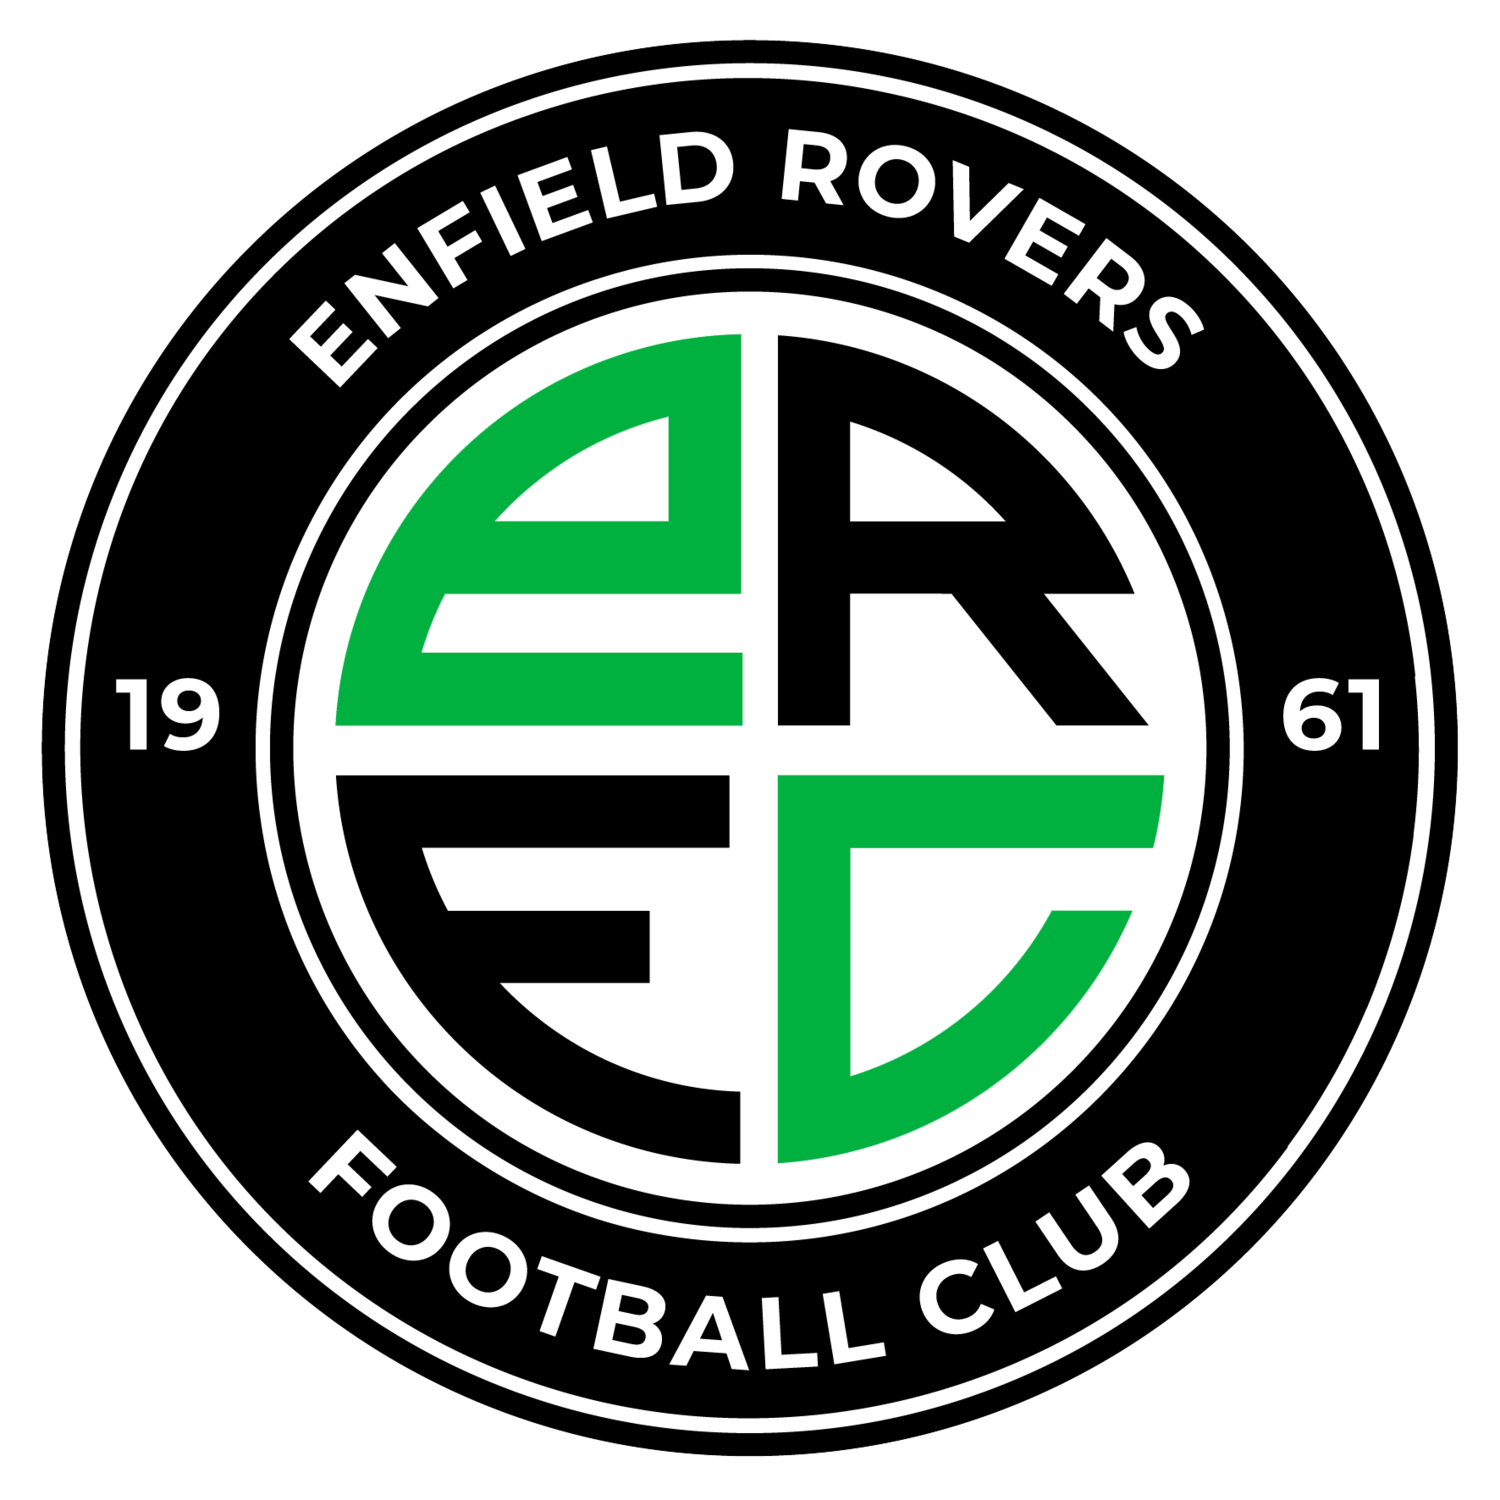 Enfield Rovers Football Club